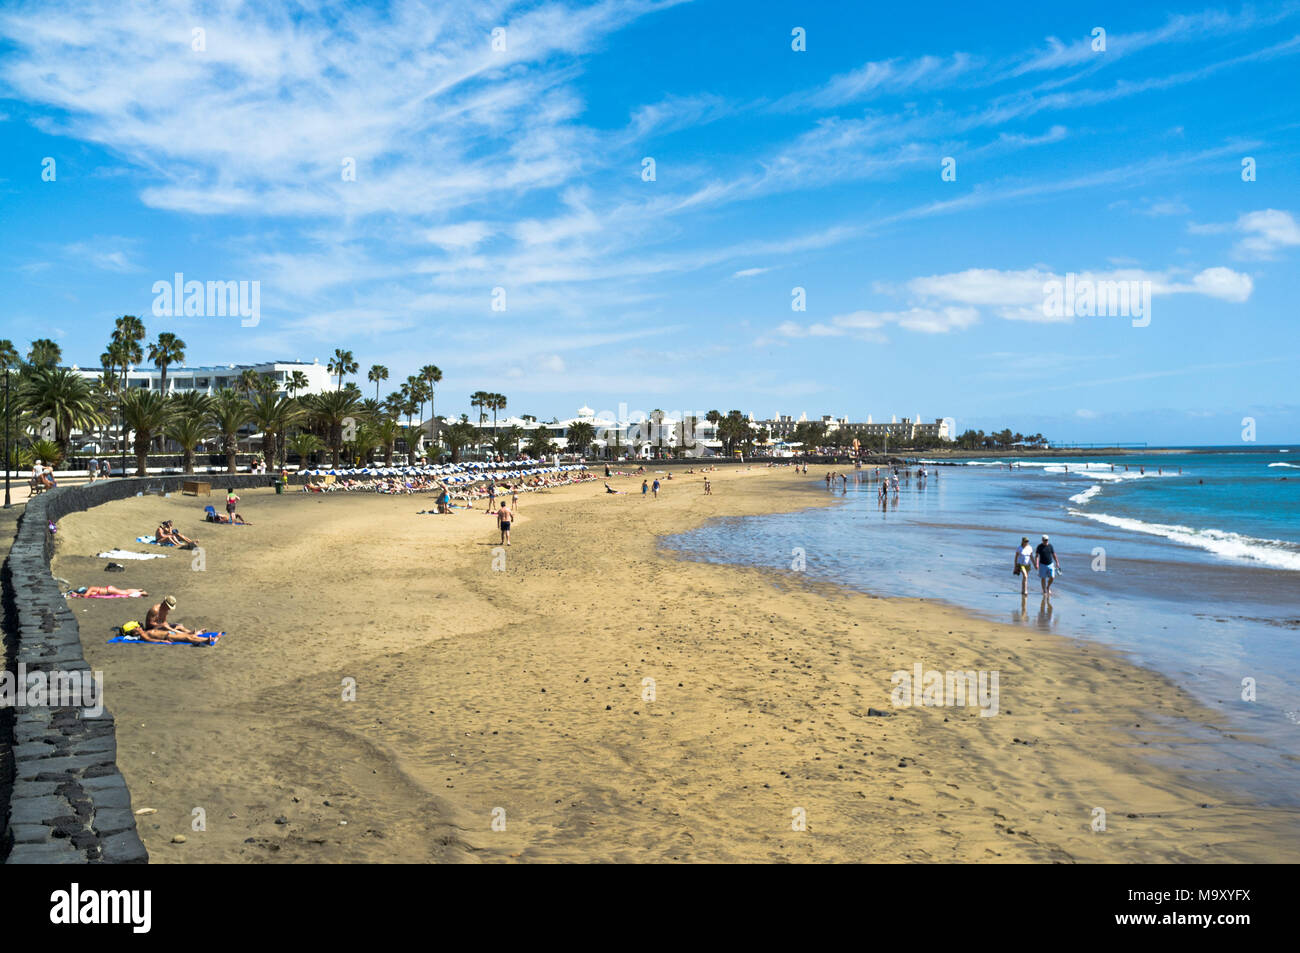 dh Beach MATAGORDA LANZAROTE People sunbathing walking along sand sea shore beaches Stock Photo